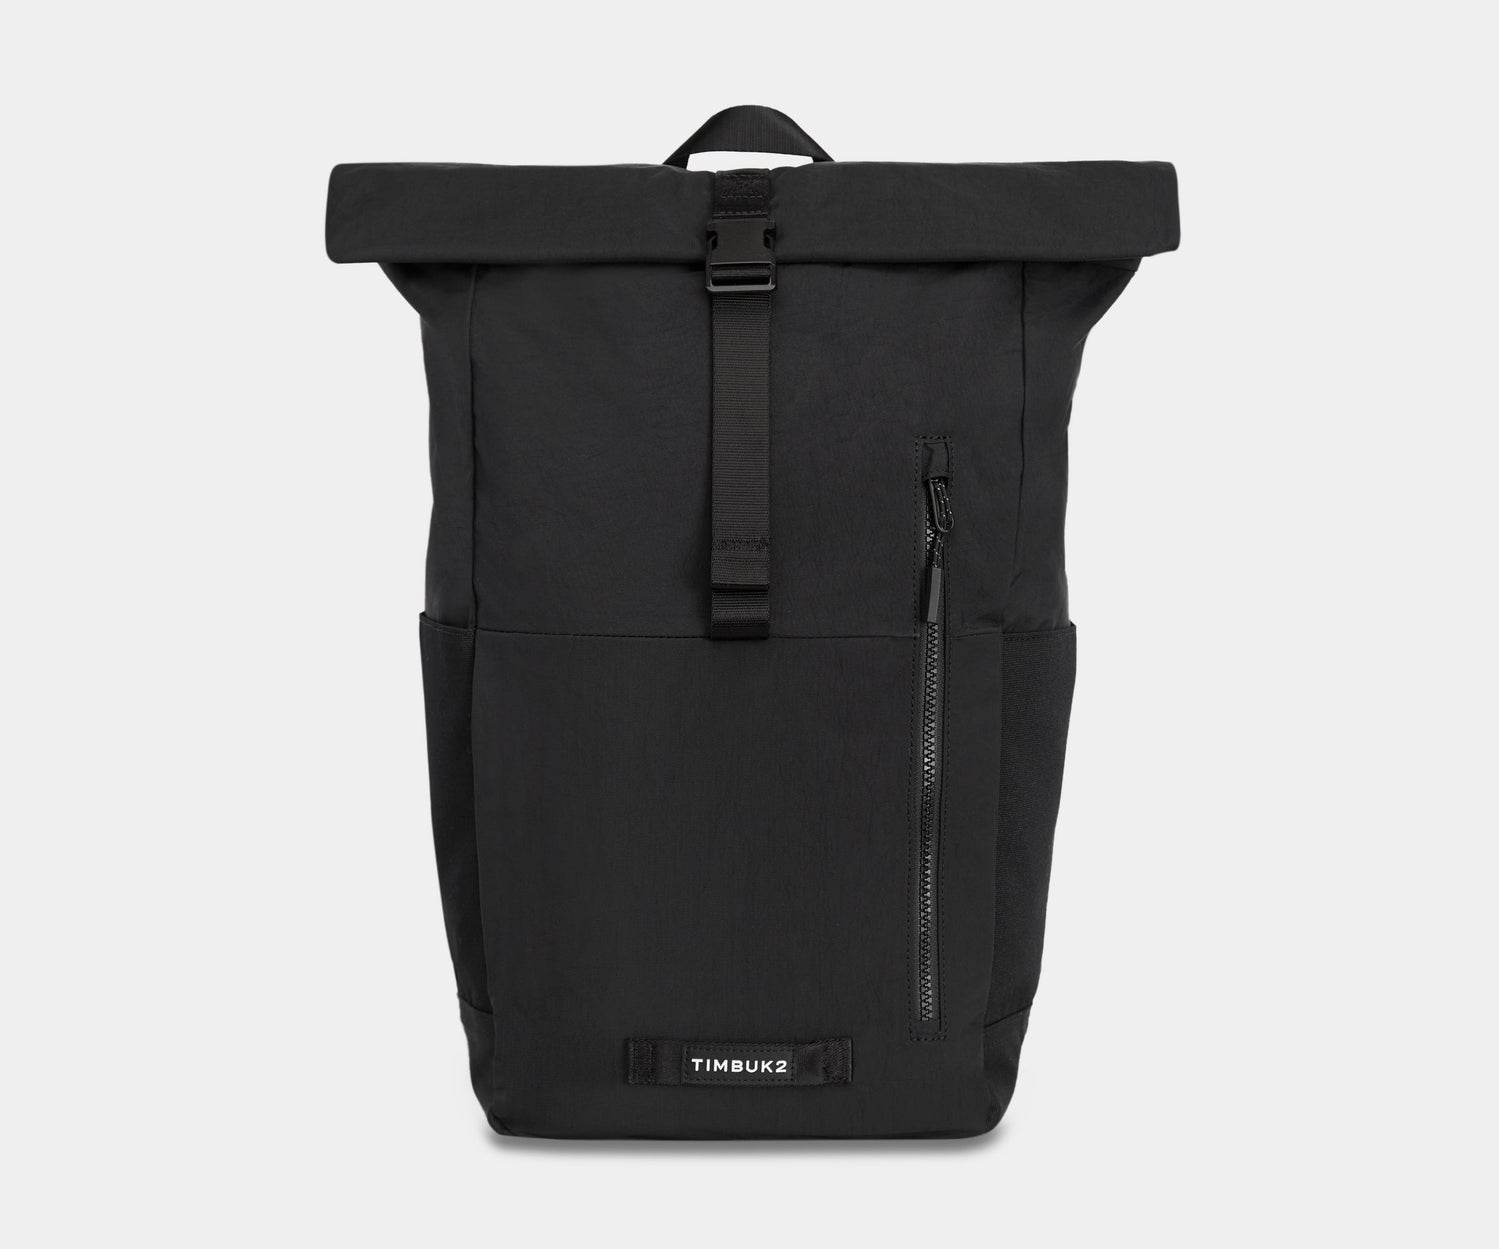 Tuck Laptop Backpack